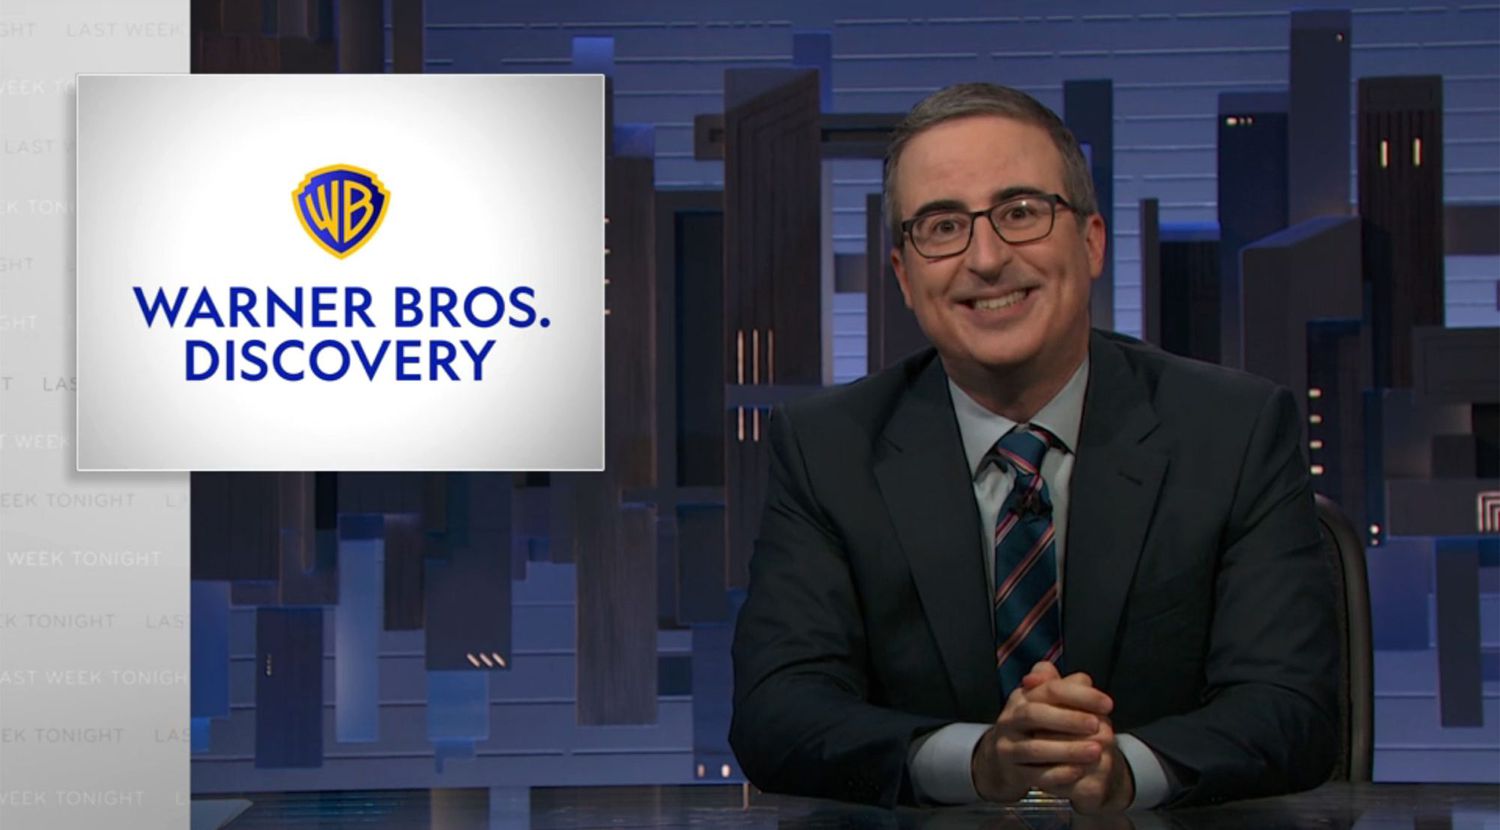 John Oliver comments on Warner Bros. Discovery merger